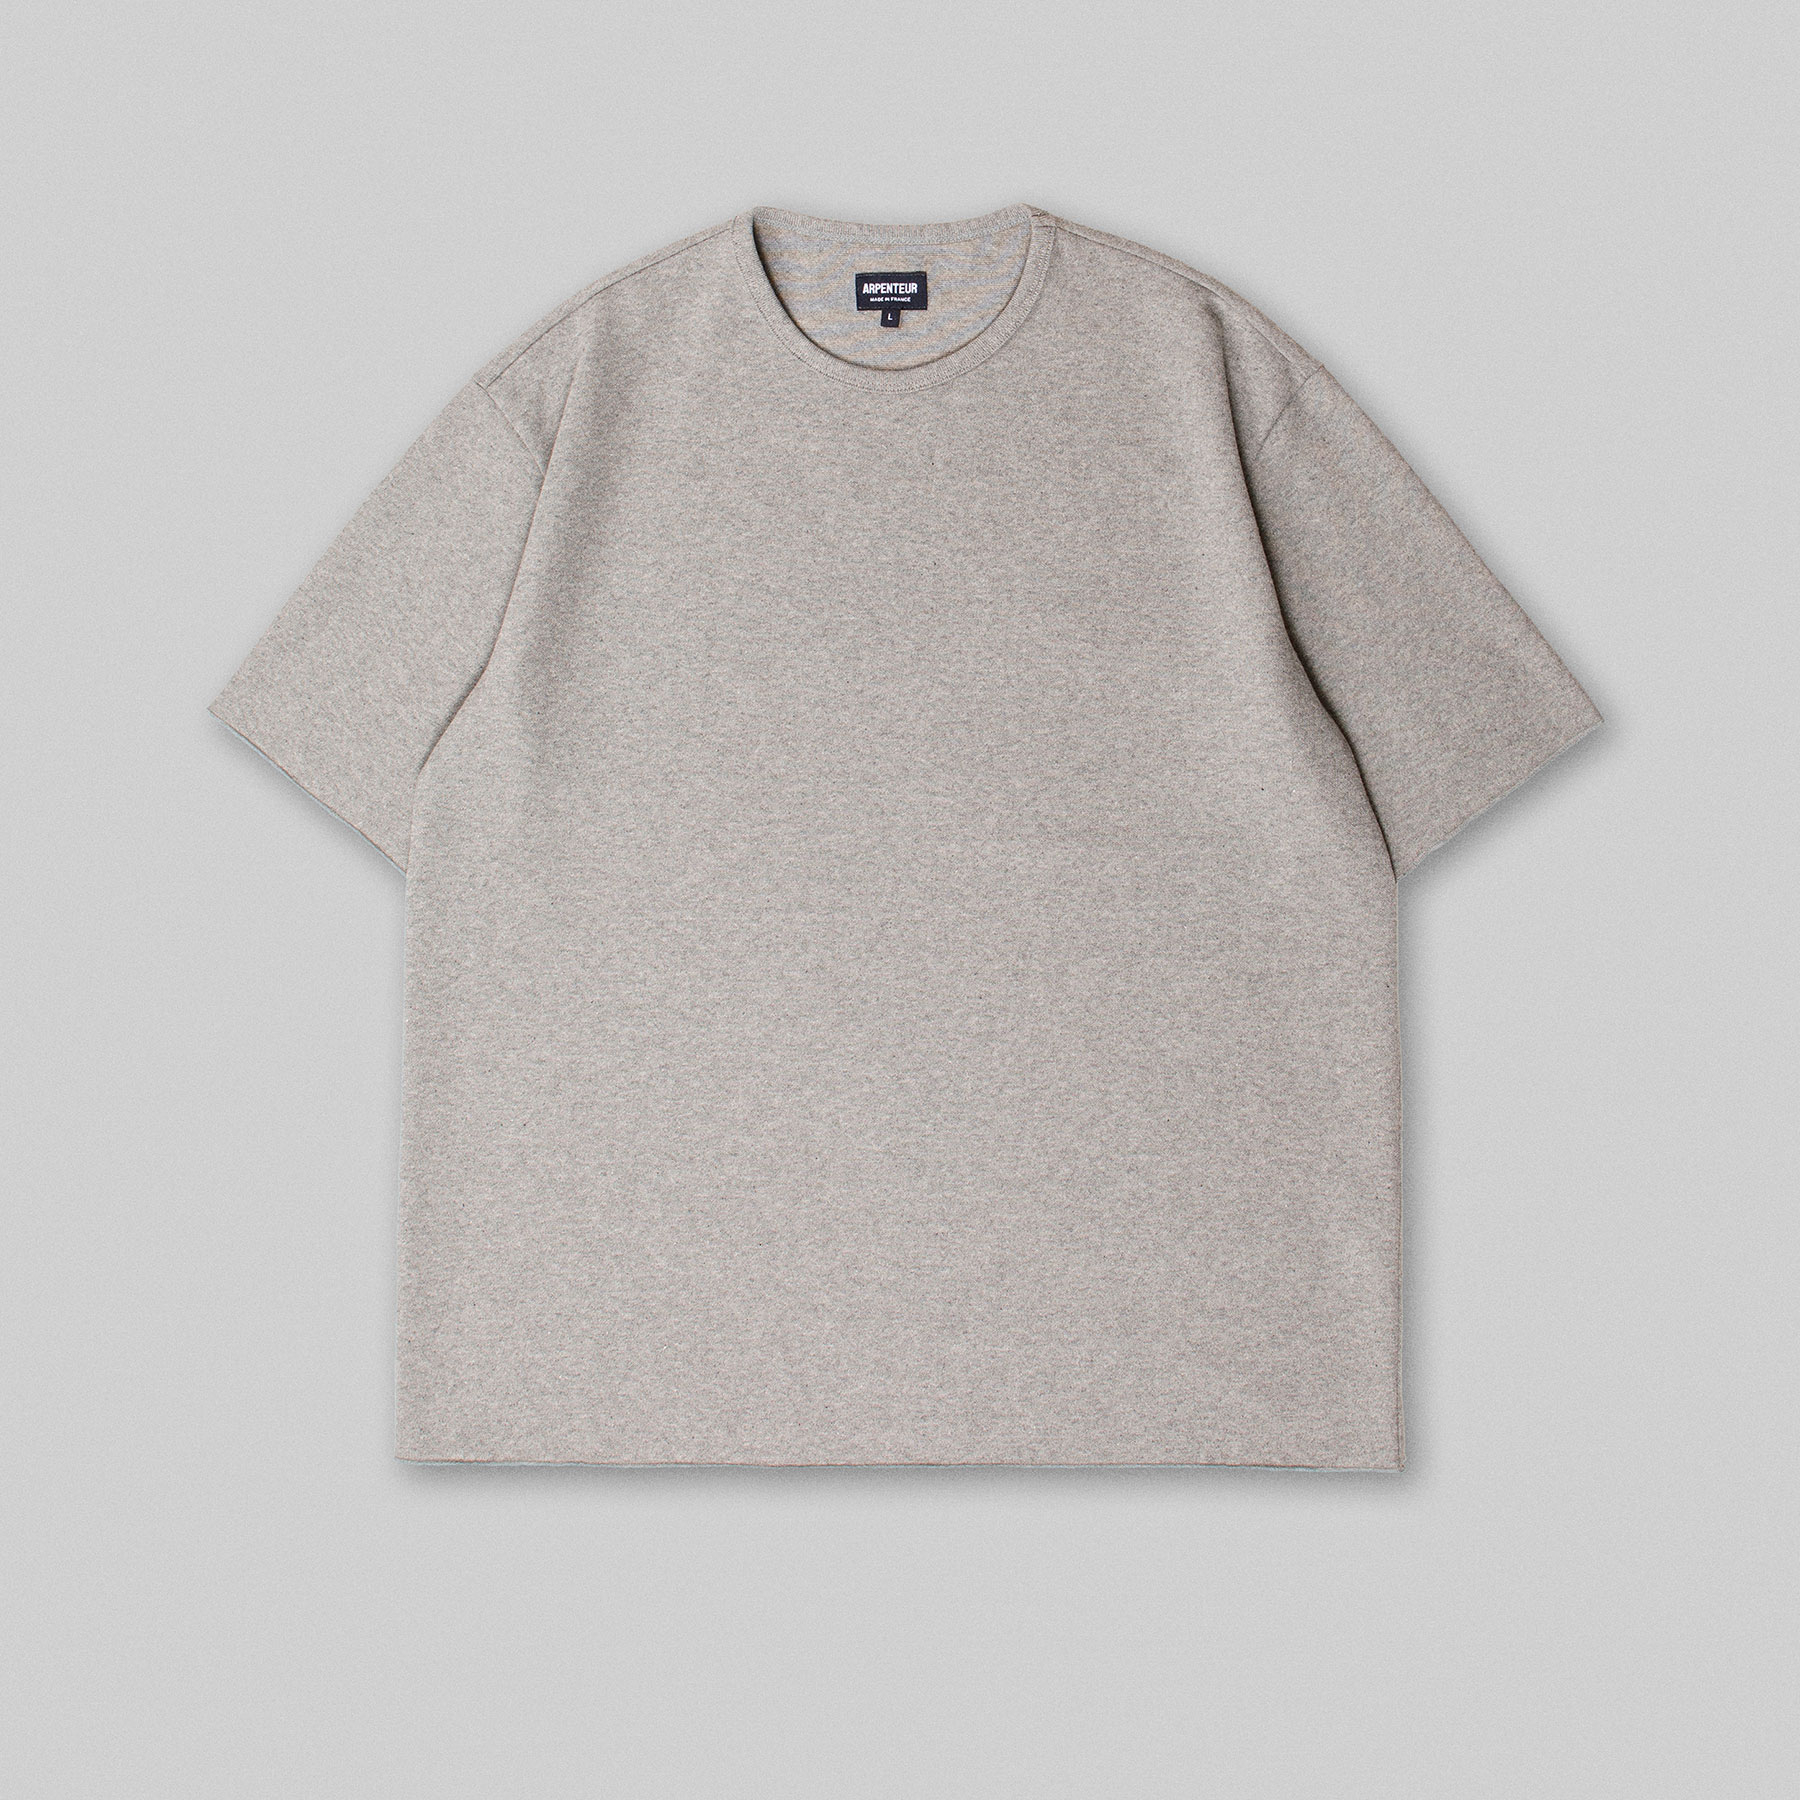 PONTUS t-shirt by Arpenteur in Melange grey color